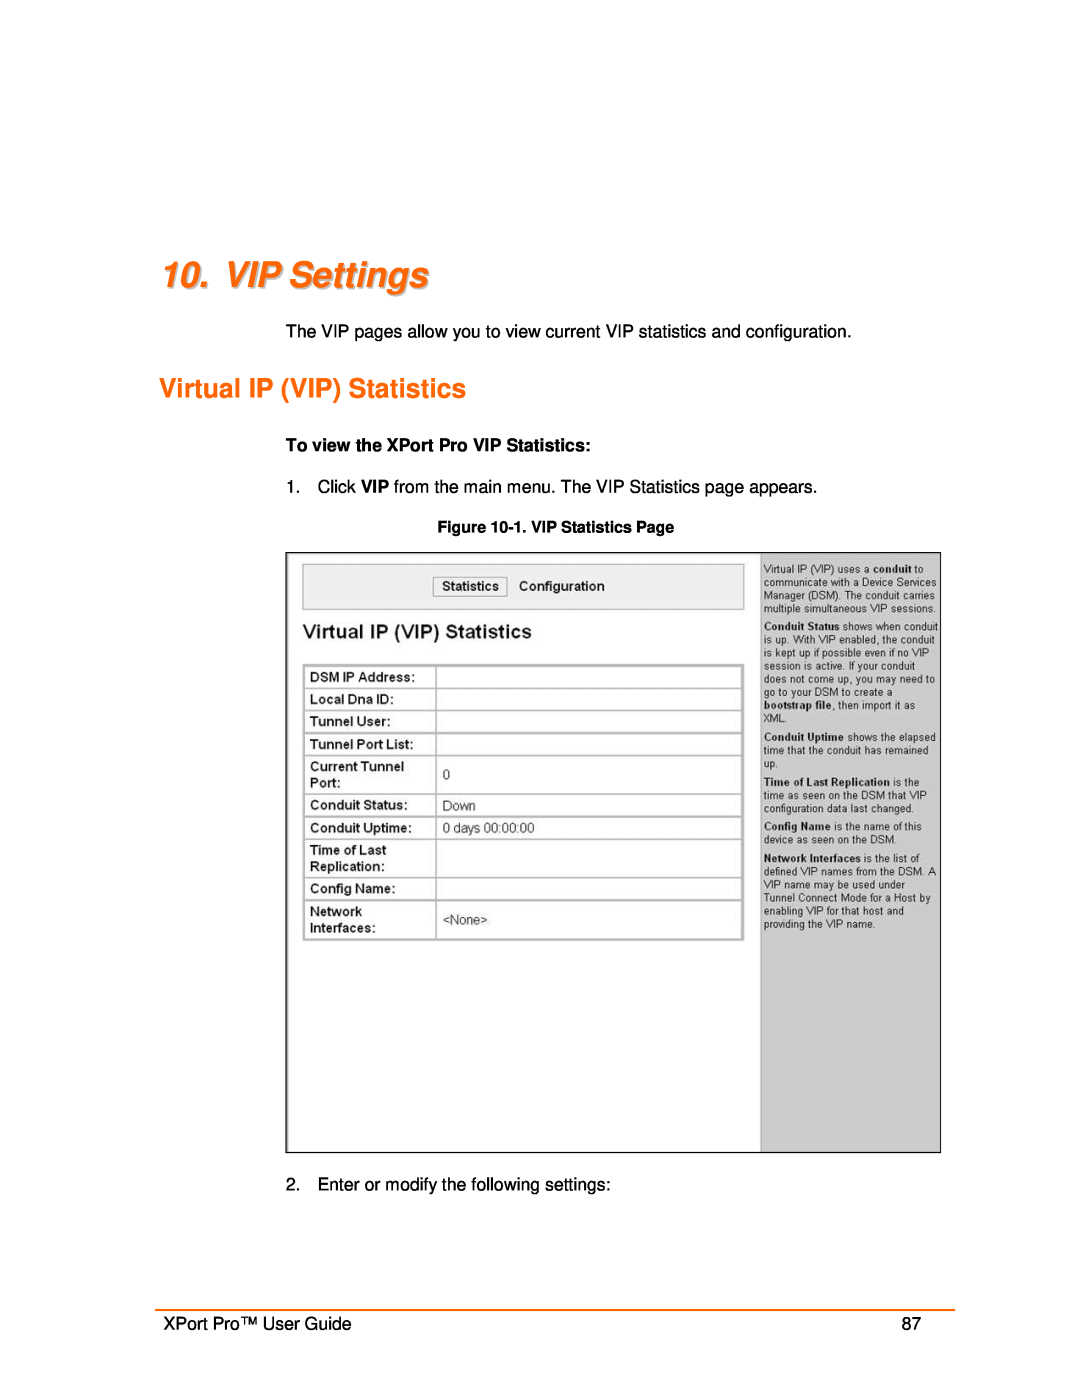 Lantronix 900-560 manual VIP Settings, Virtual IP VIP Statistics, 1. VIP Statistics Page 